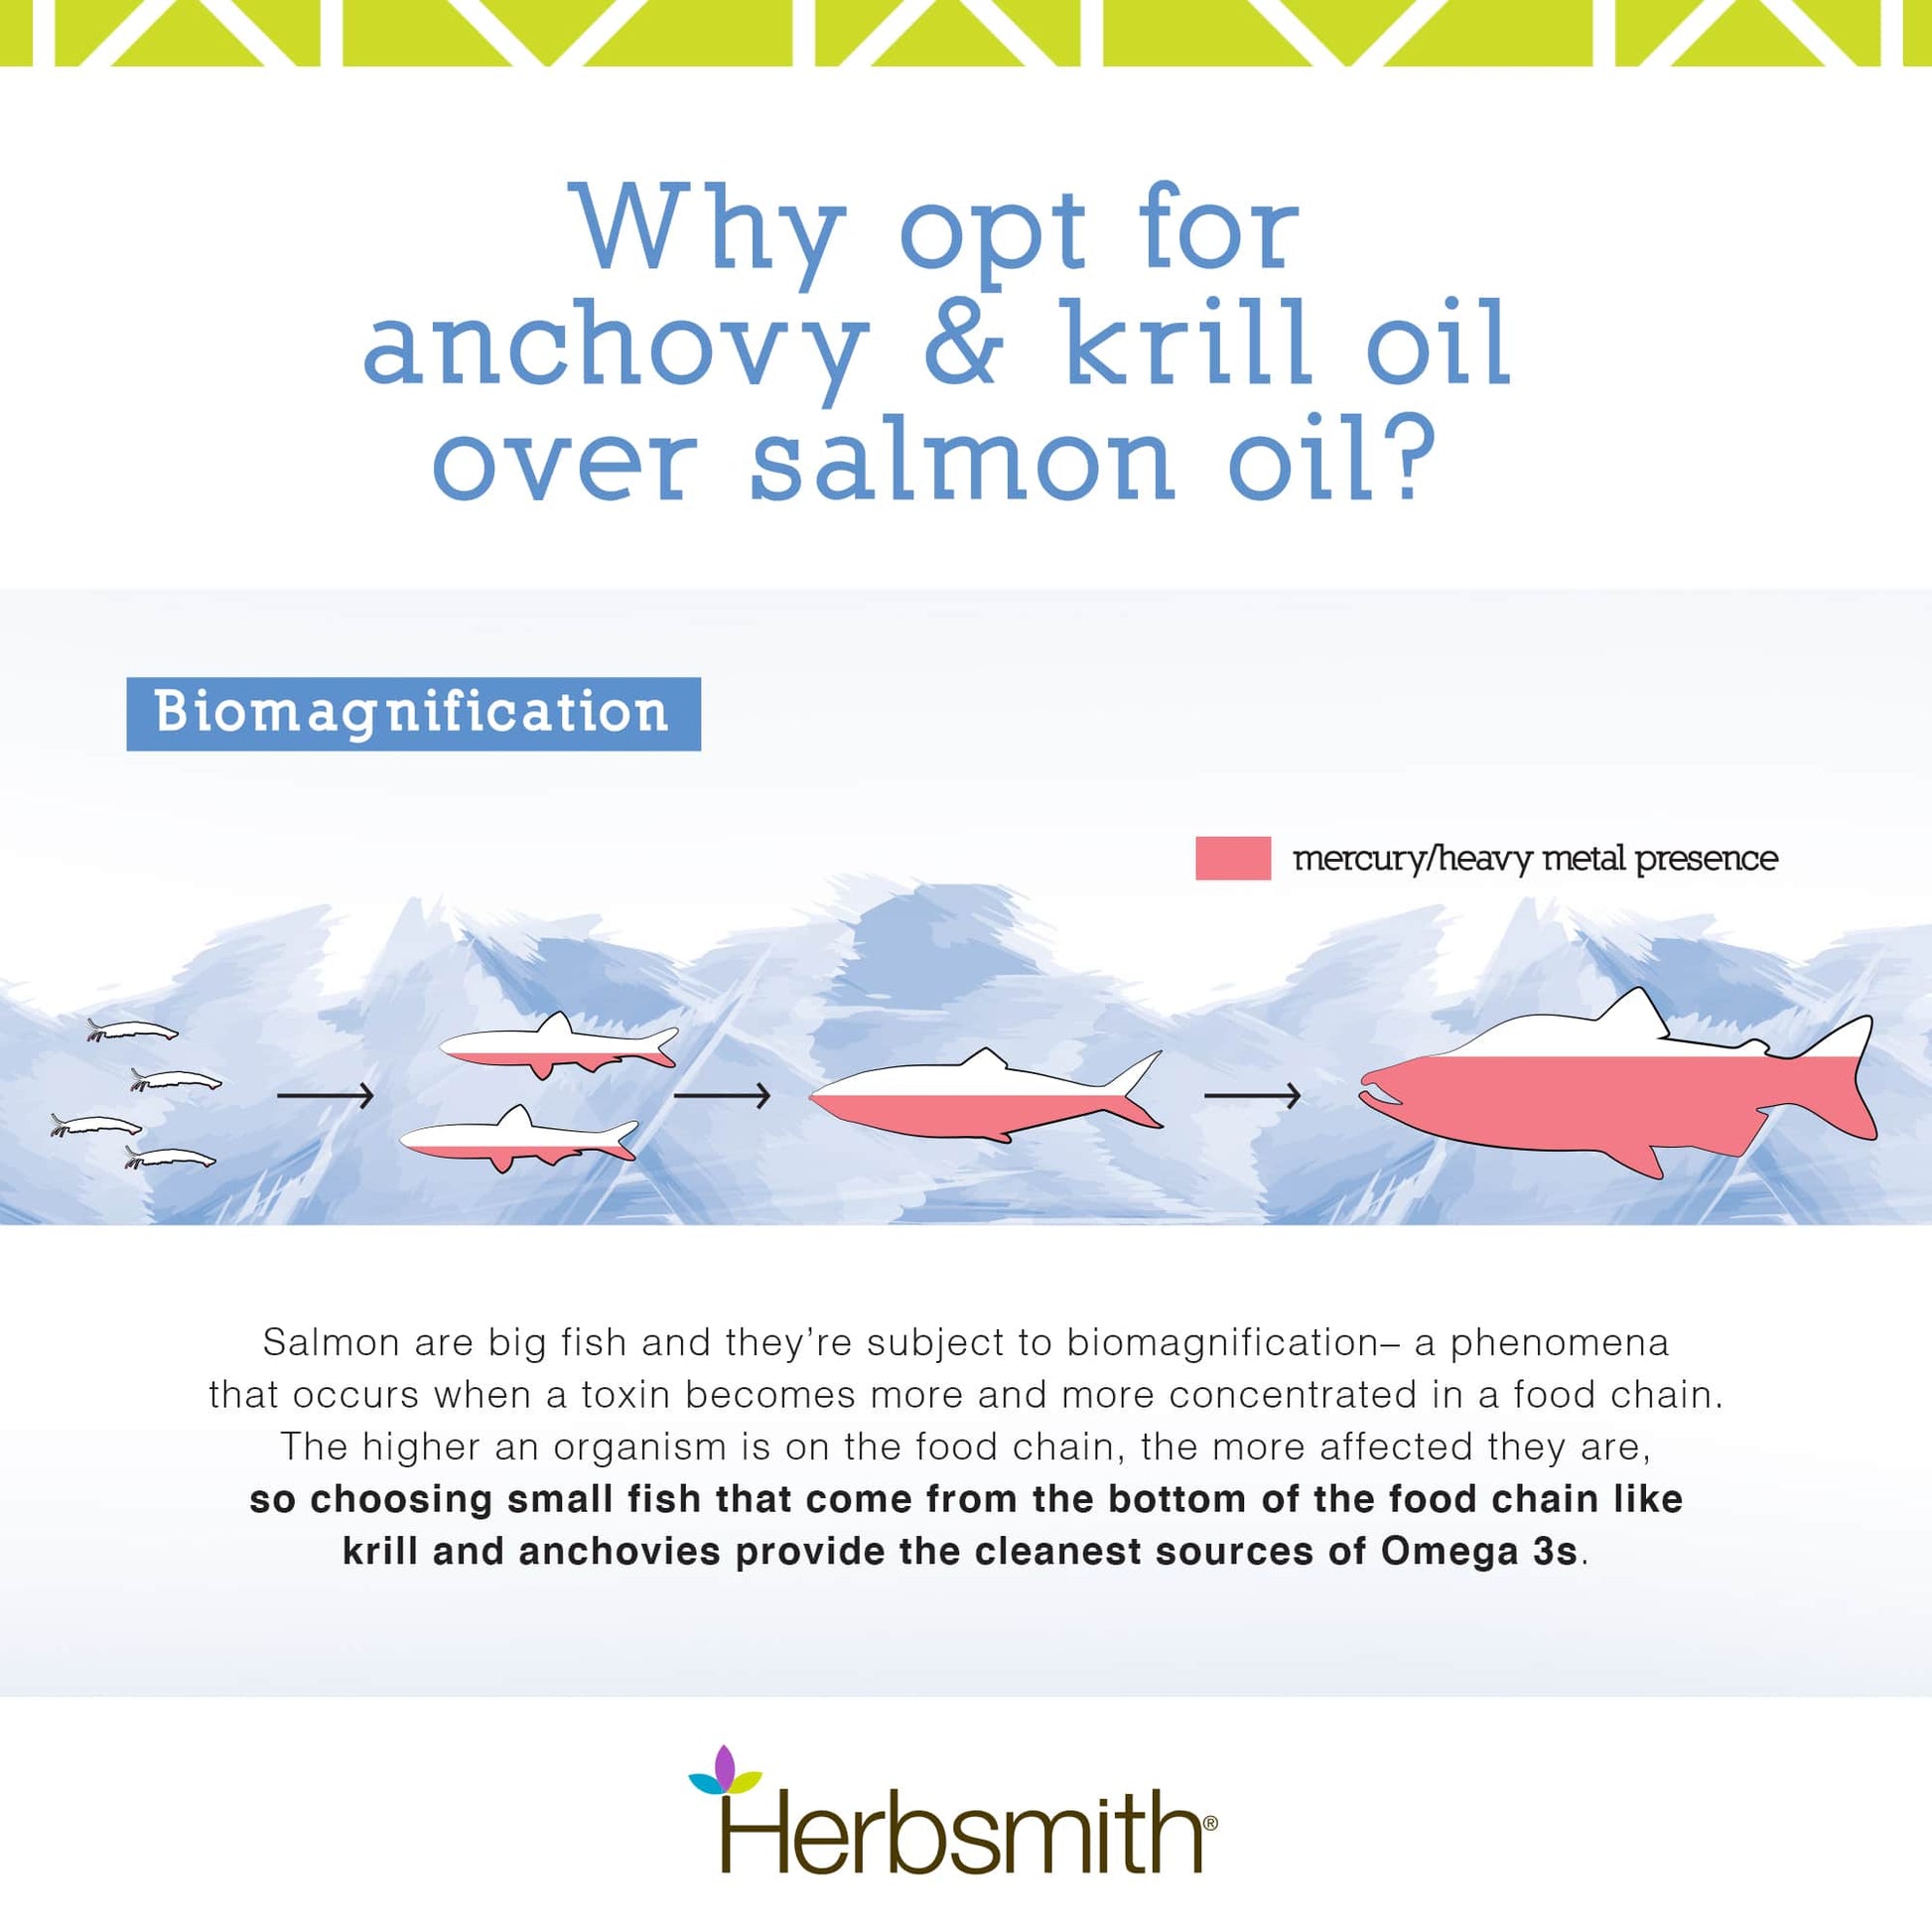 herbsmith-amazon-art-files-glimmer-final-anchovy-krill-salmon-comparison